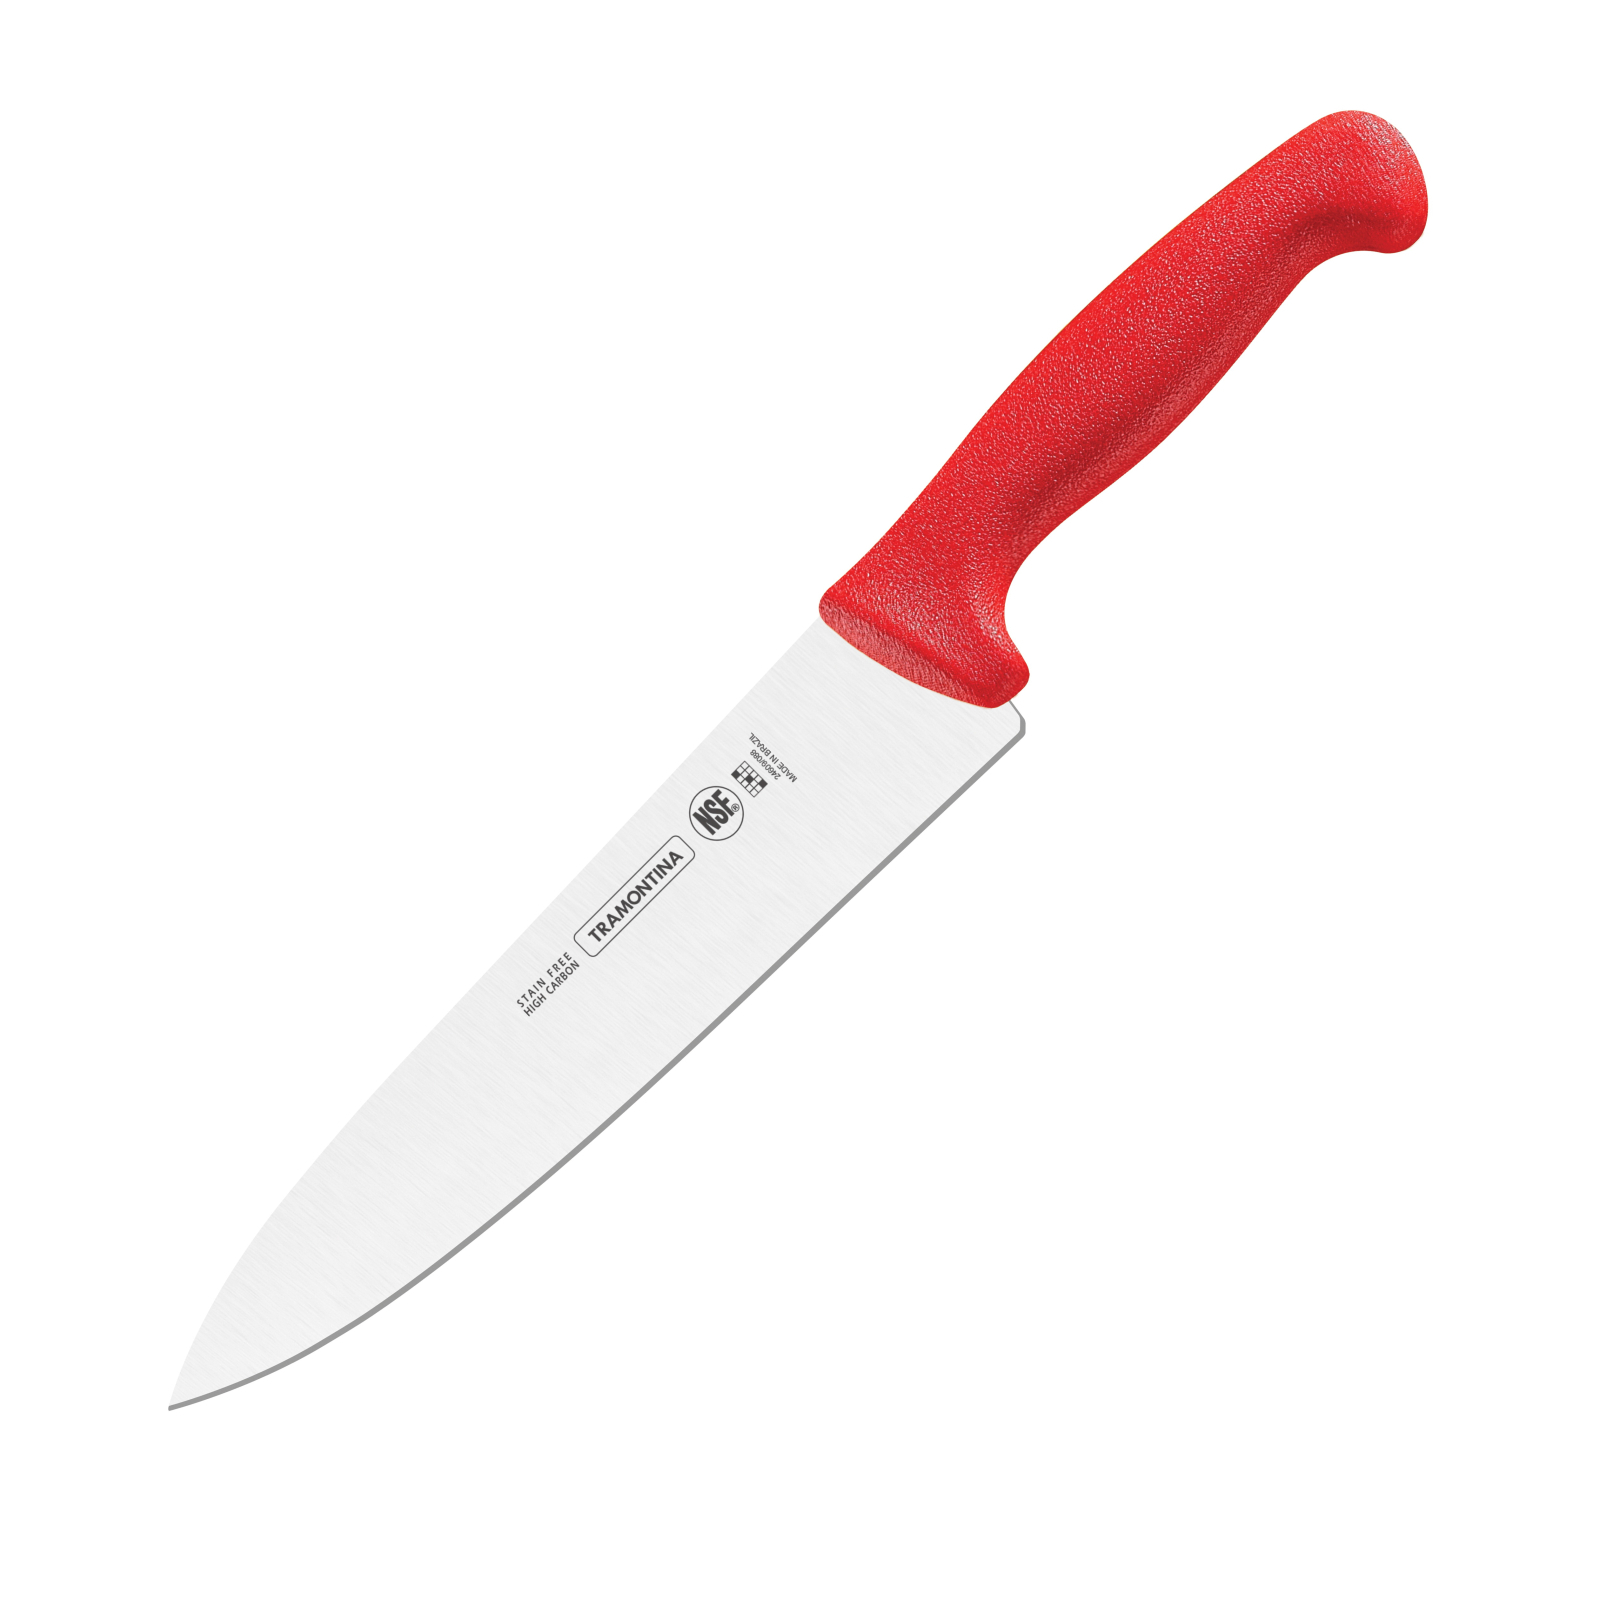 Кухонный нож Tramontina Profissional Master Red 254 мм (24609/070)